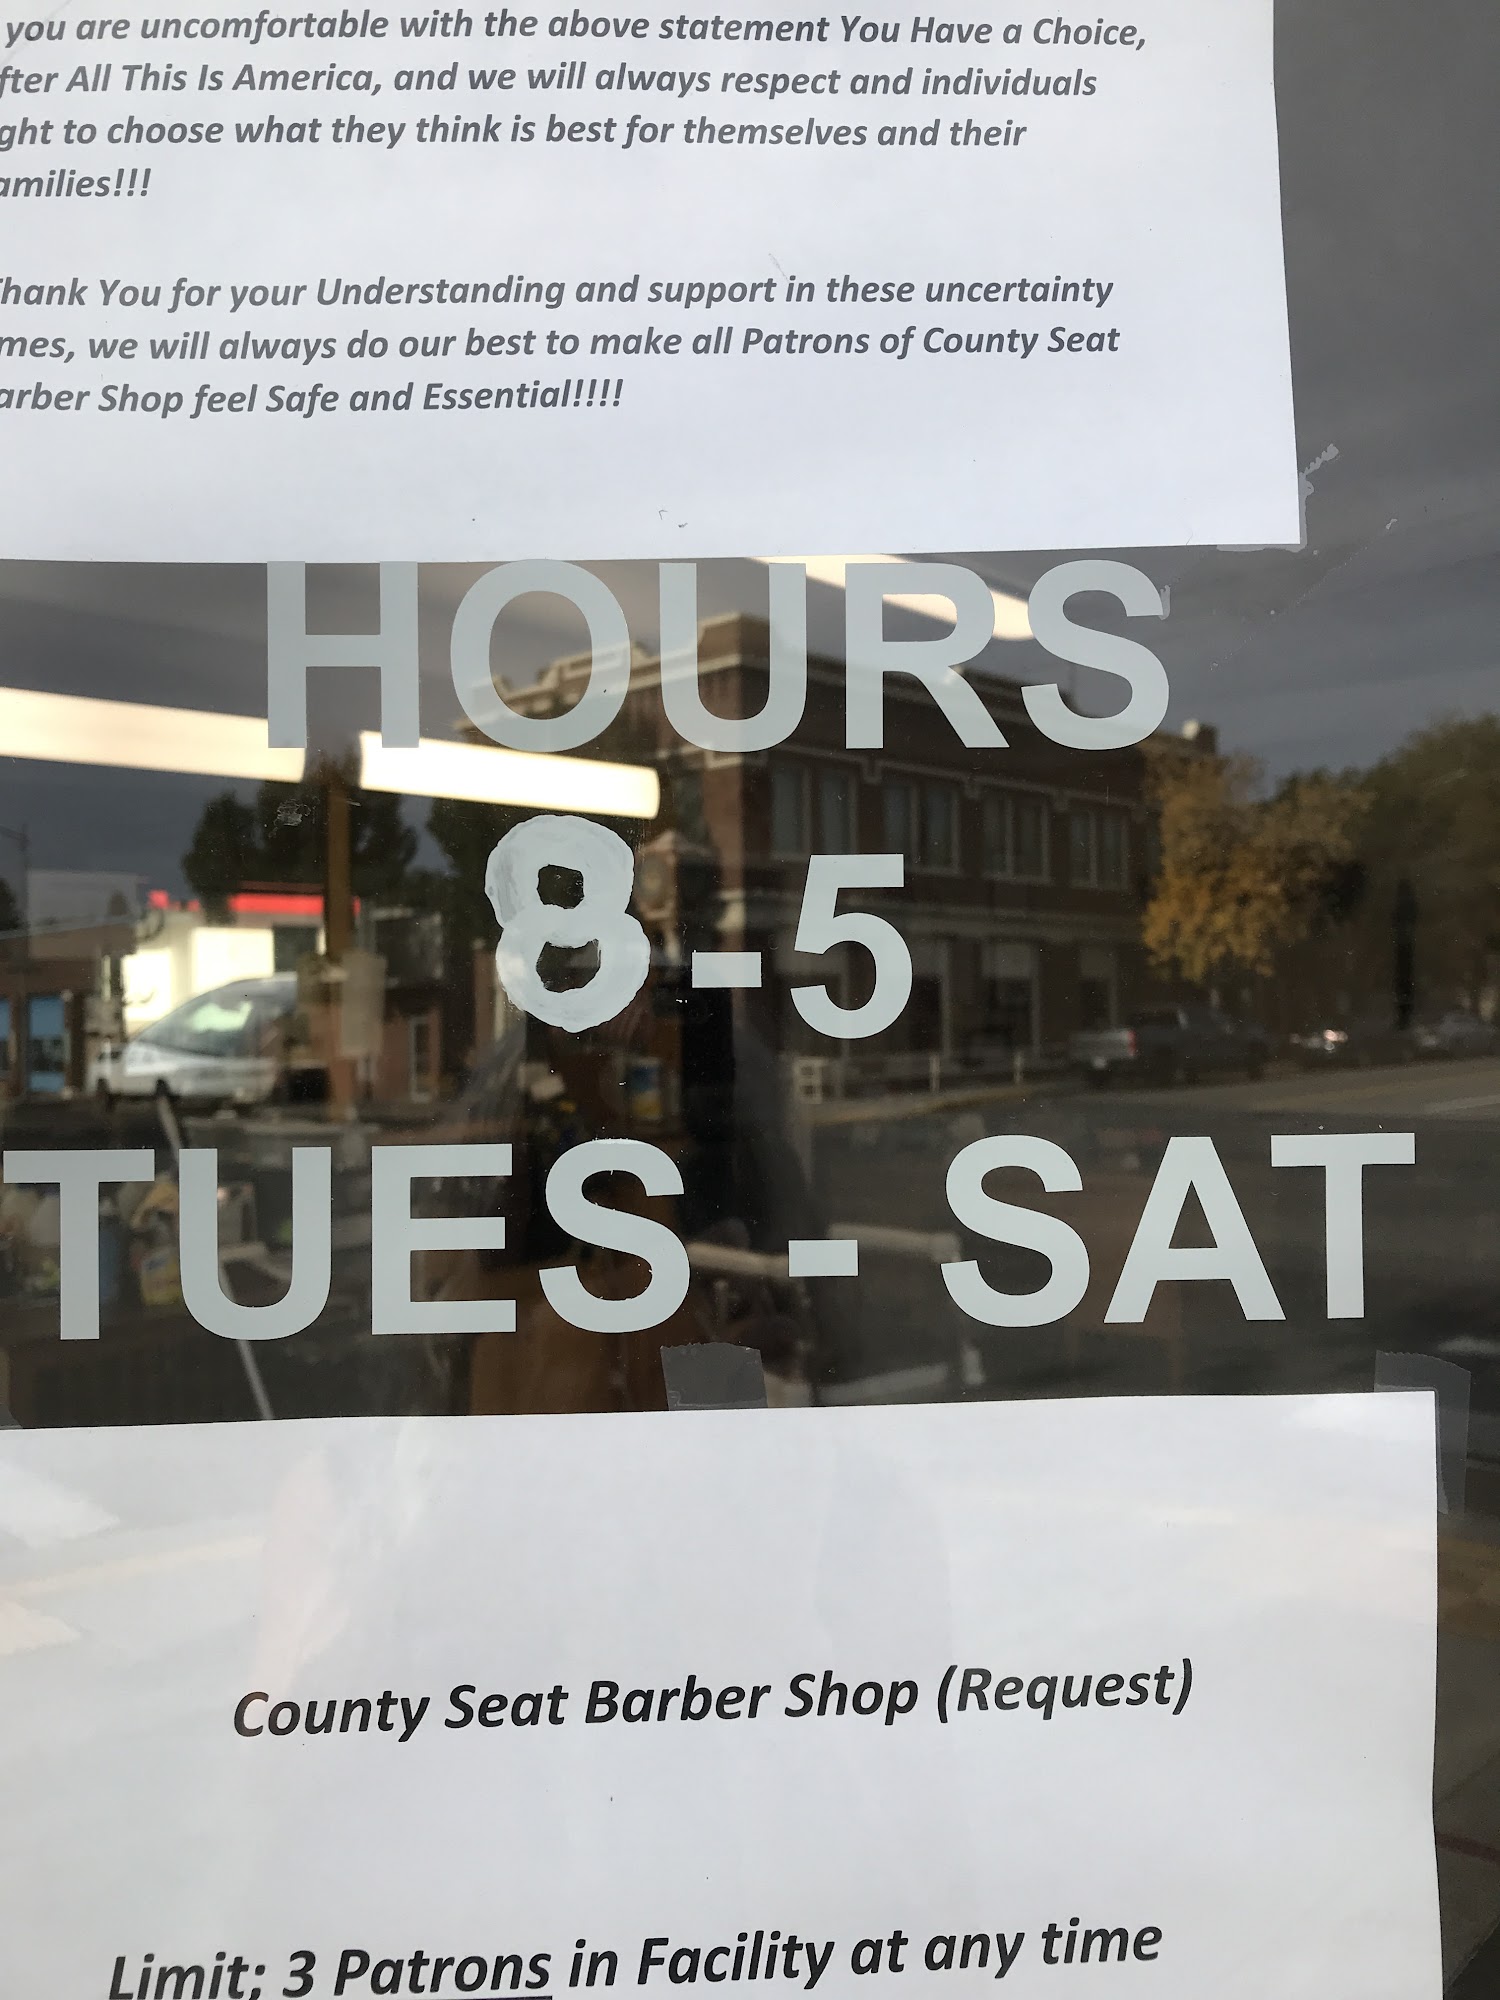 County Seat Barbershop 101 2nd Ave S, Okanogan Washington 98840